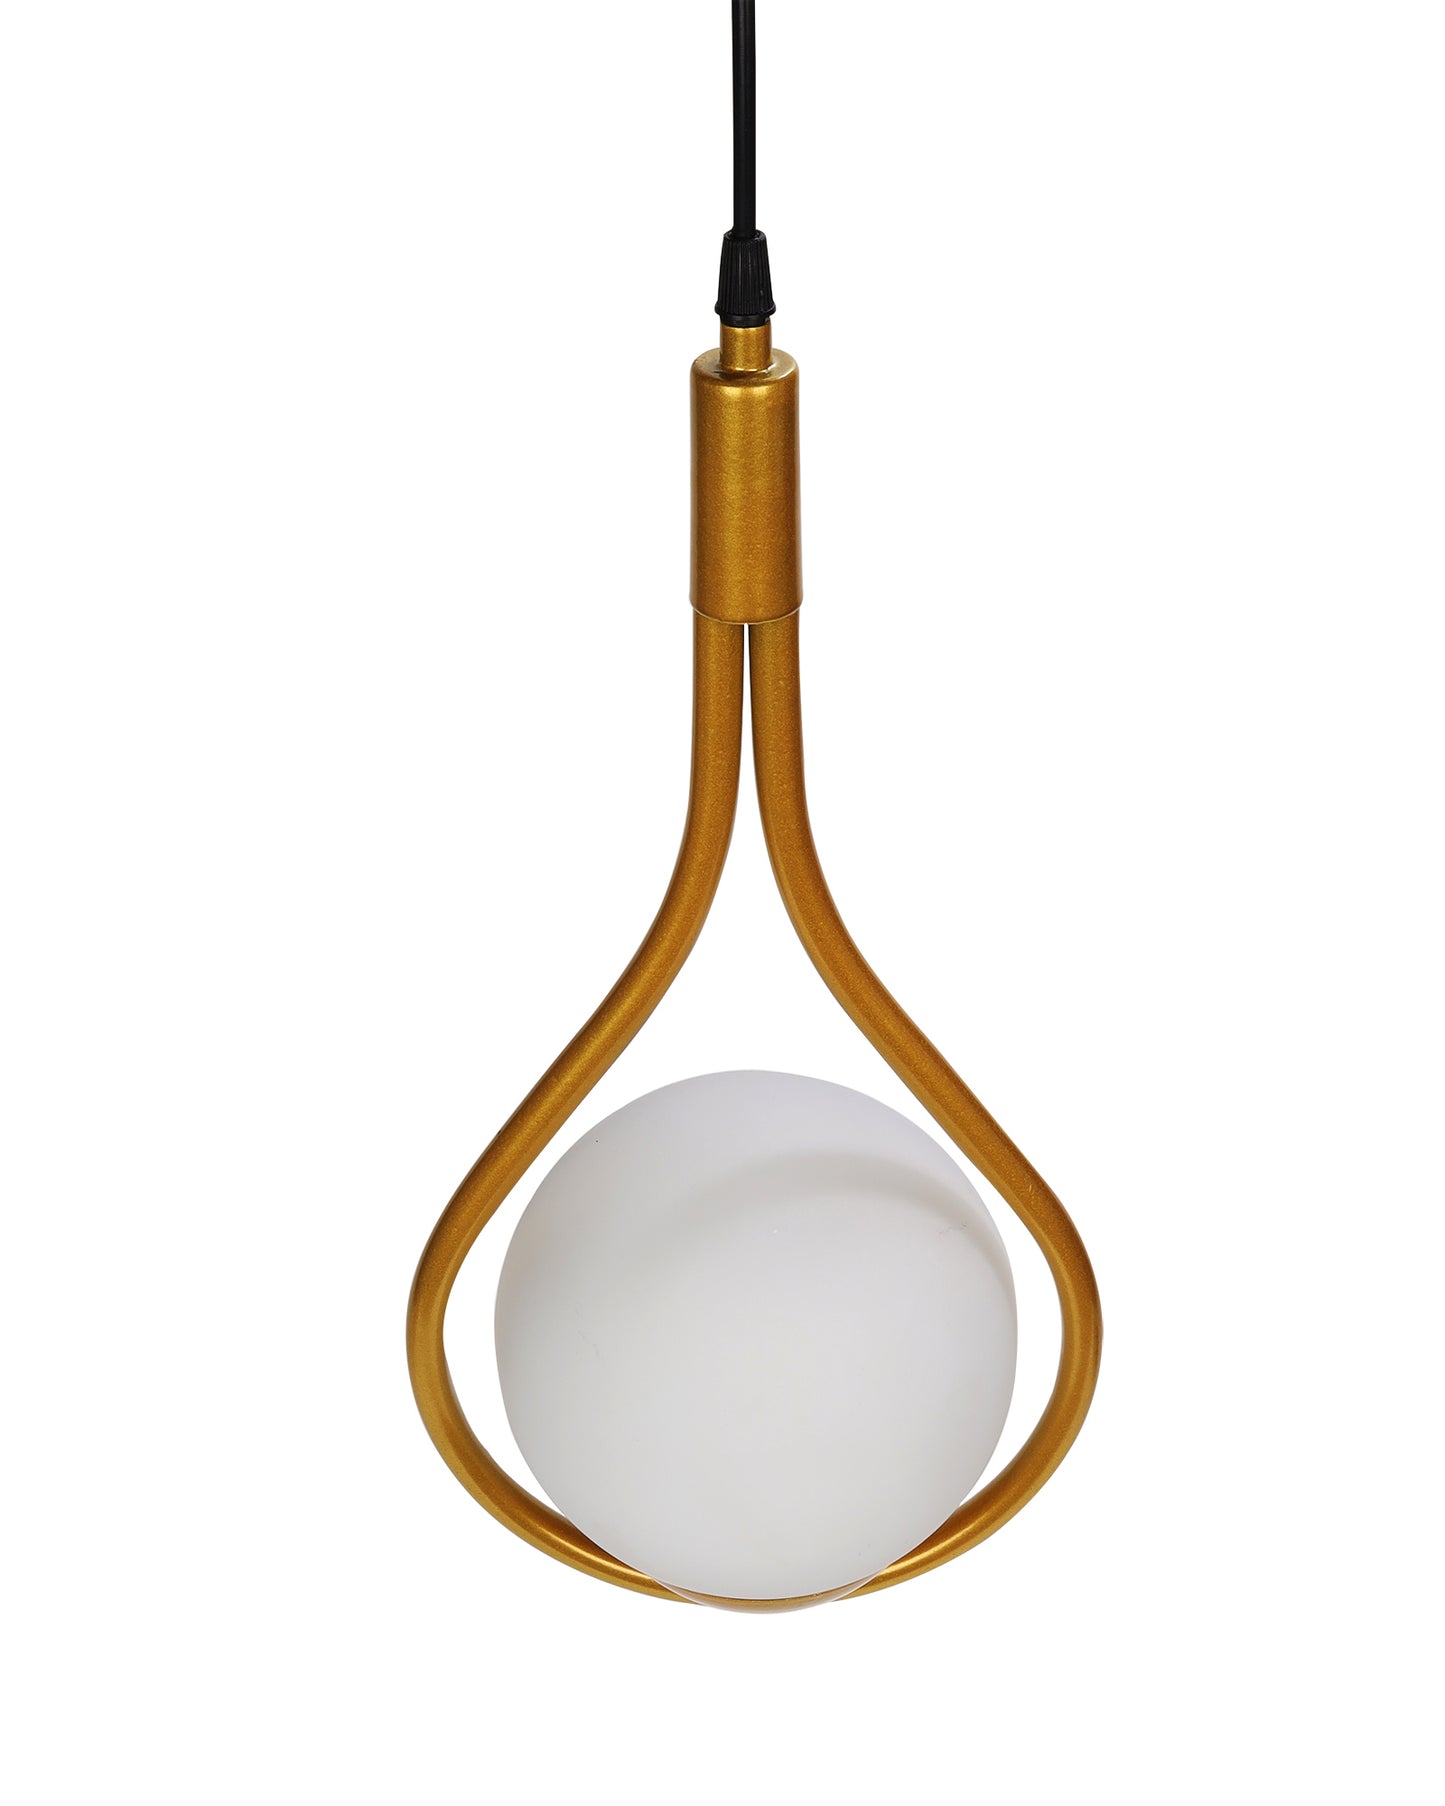 Mid Century Modern Light Chandelier Lighting, White Frosted Glass Globe Lampshade Pendant Indoor Hanging Light Fixture, Golden Water Drop